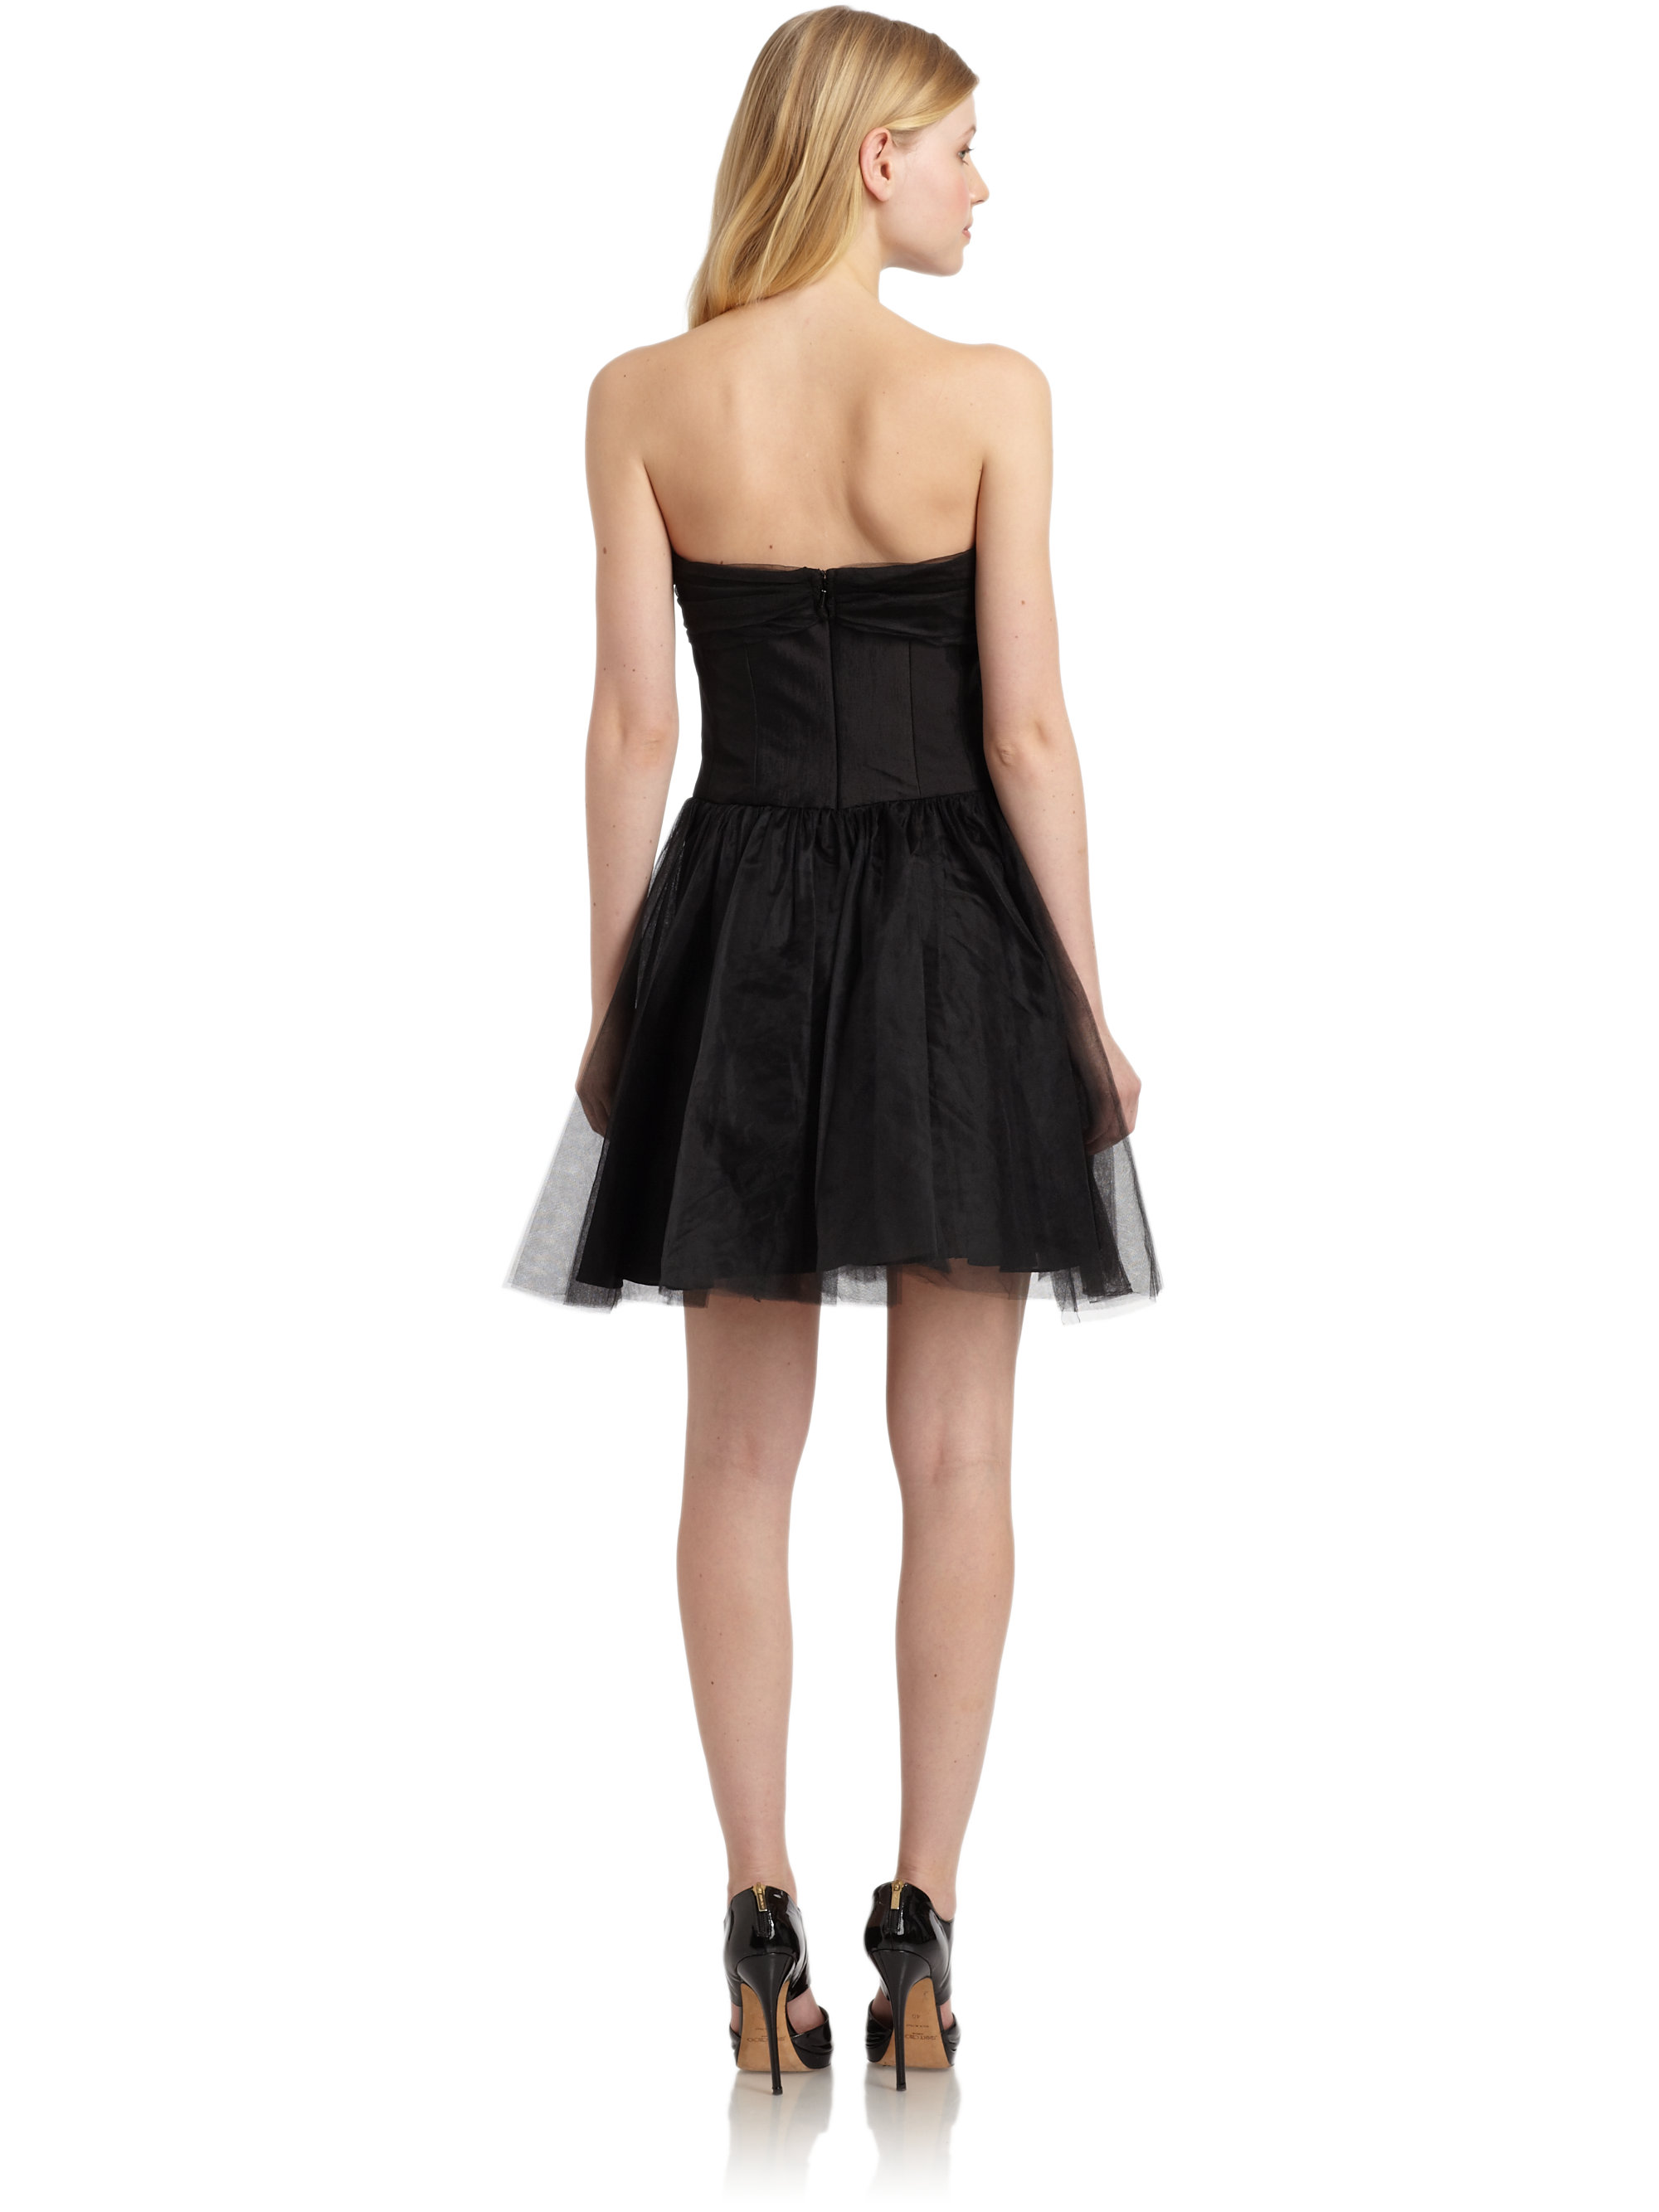 Lyst - Badgley Mischka Strapless Tulle Dress in Black